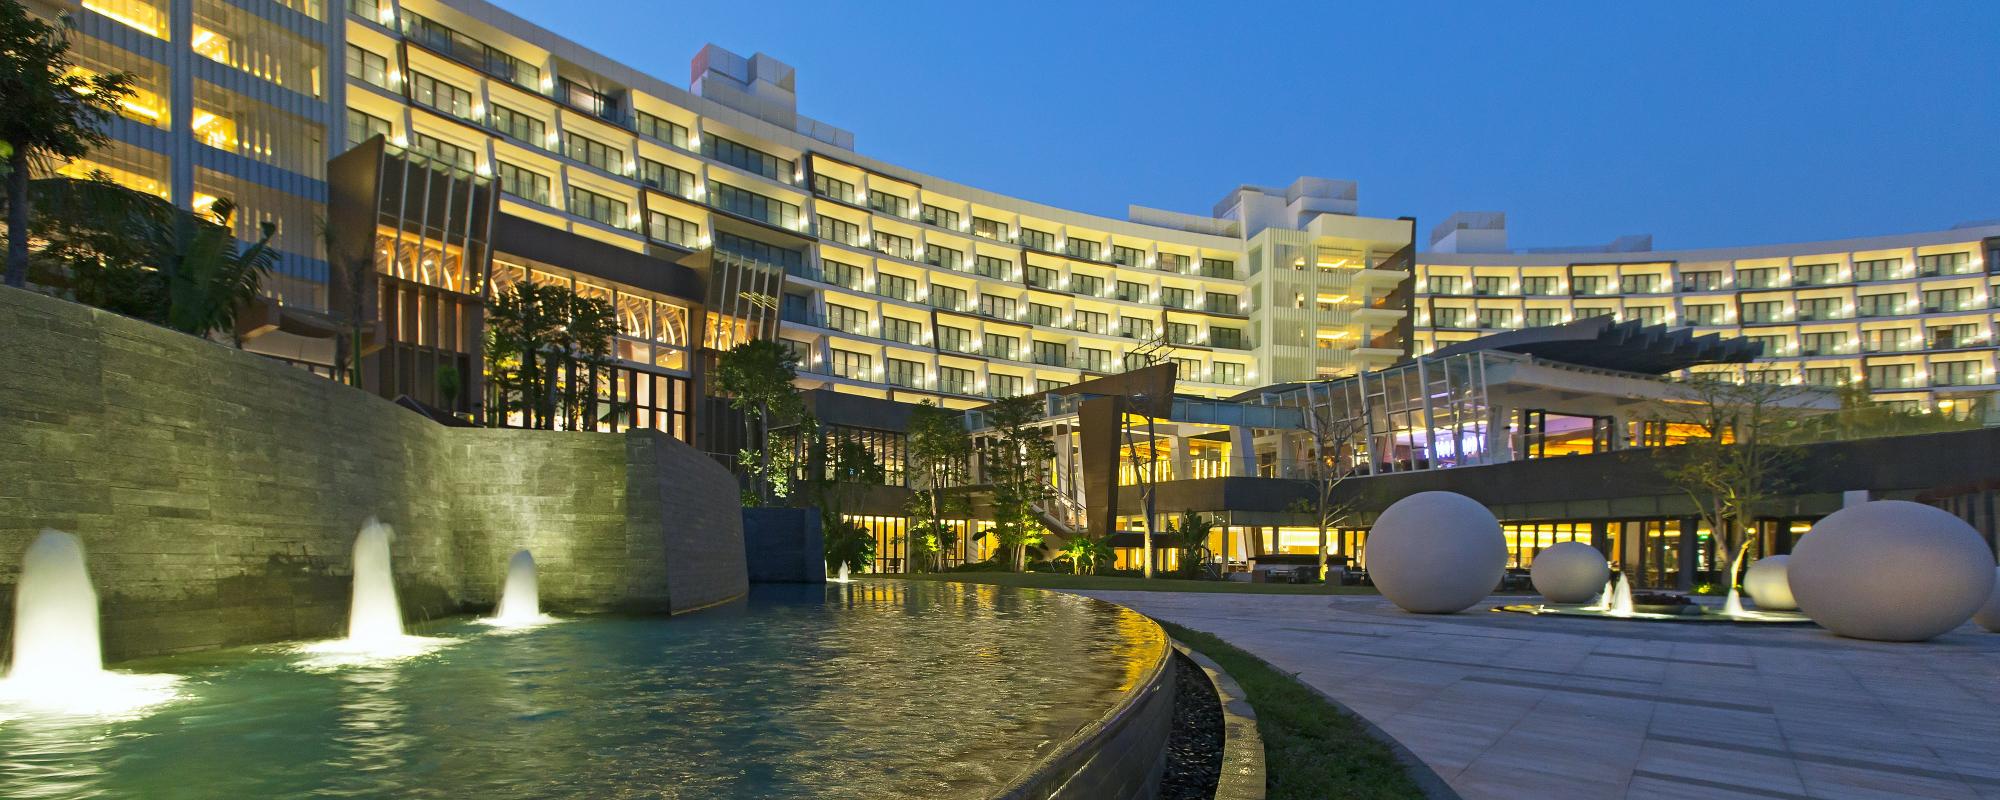 View The Westin Sanya Haitang Bay Resort's impressive hotel in dazzling China.